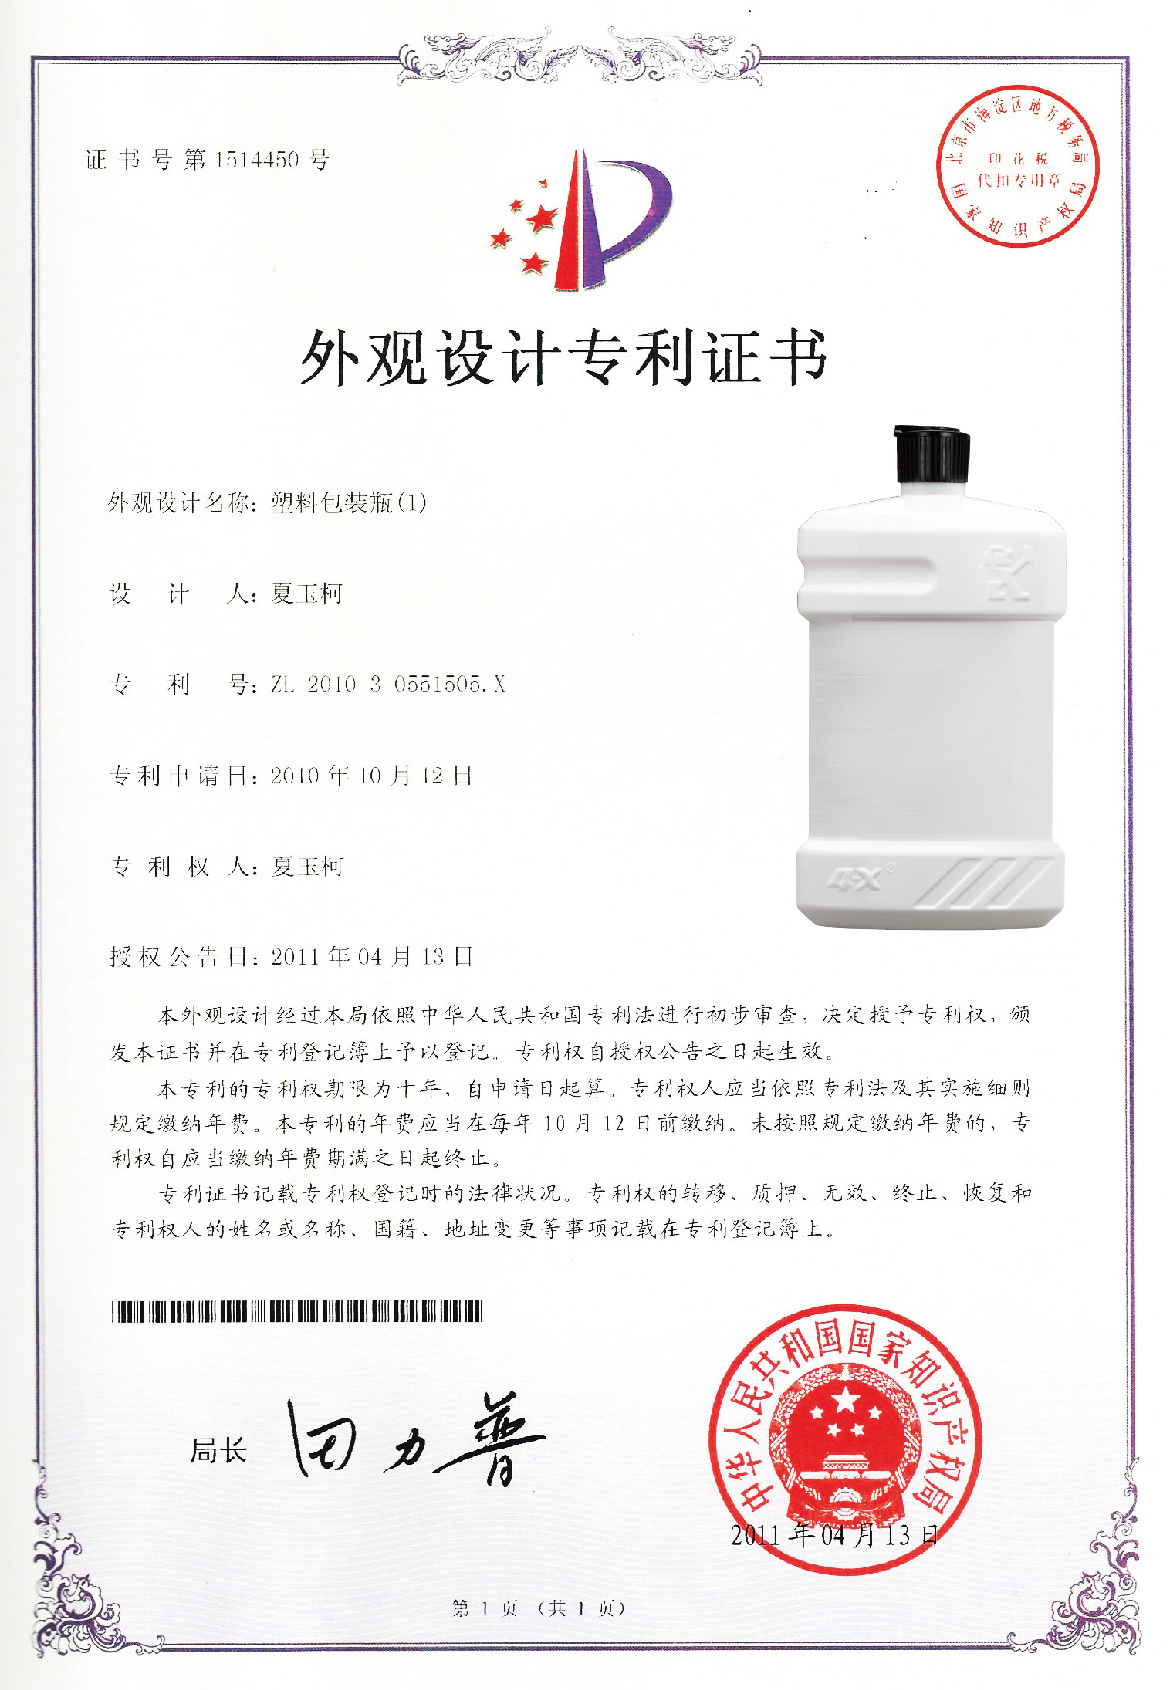 Patente de botella de plástico shike 2